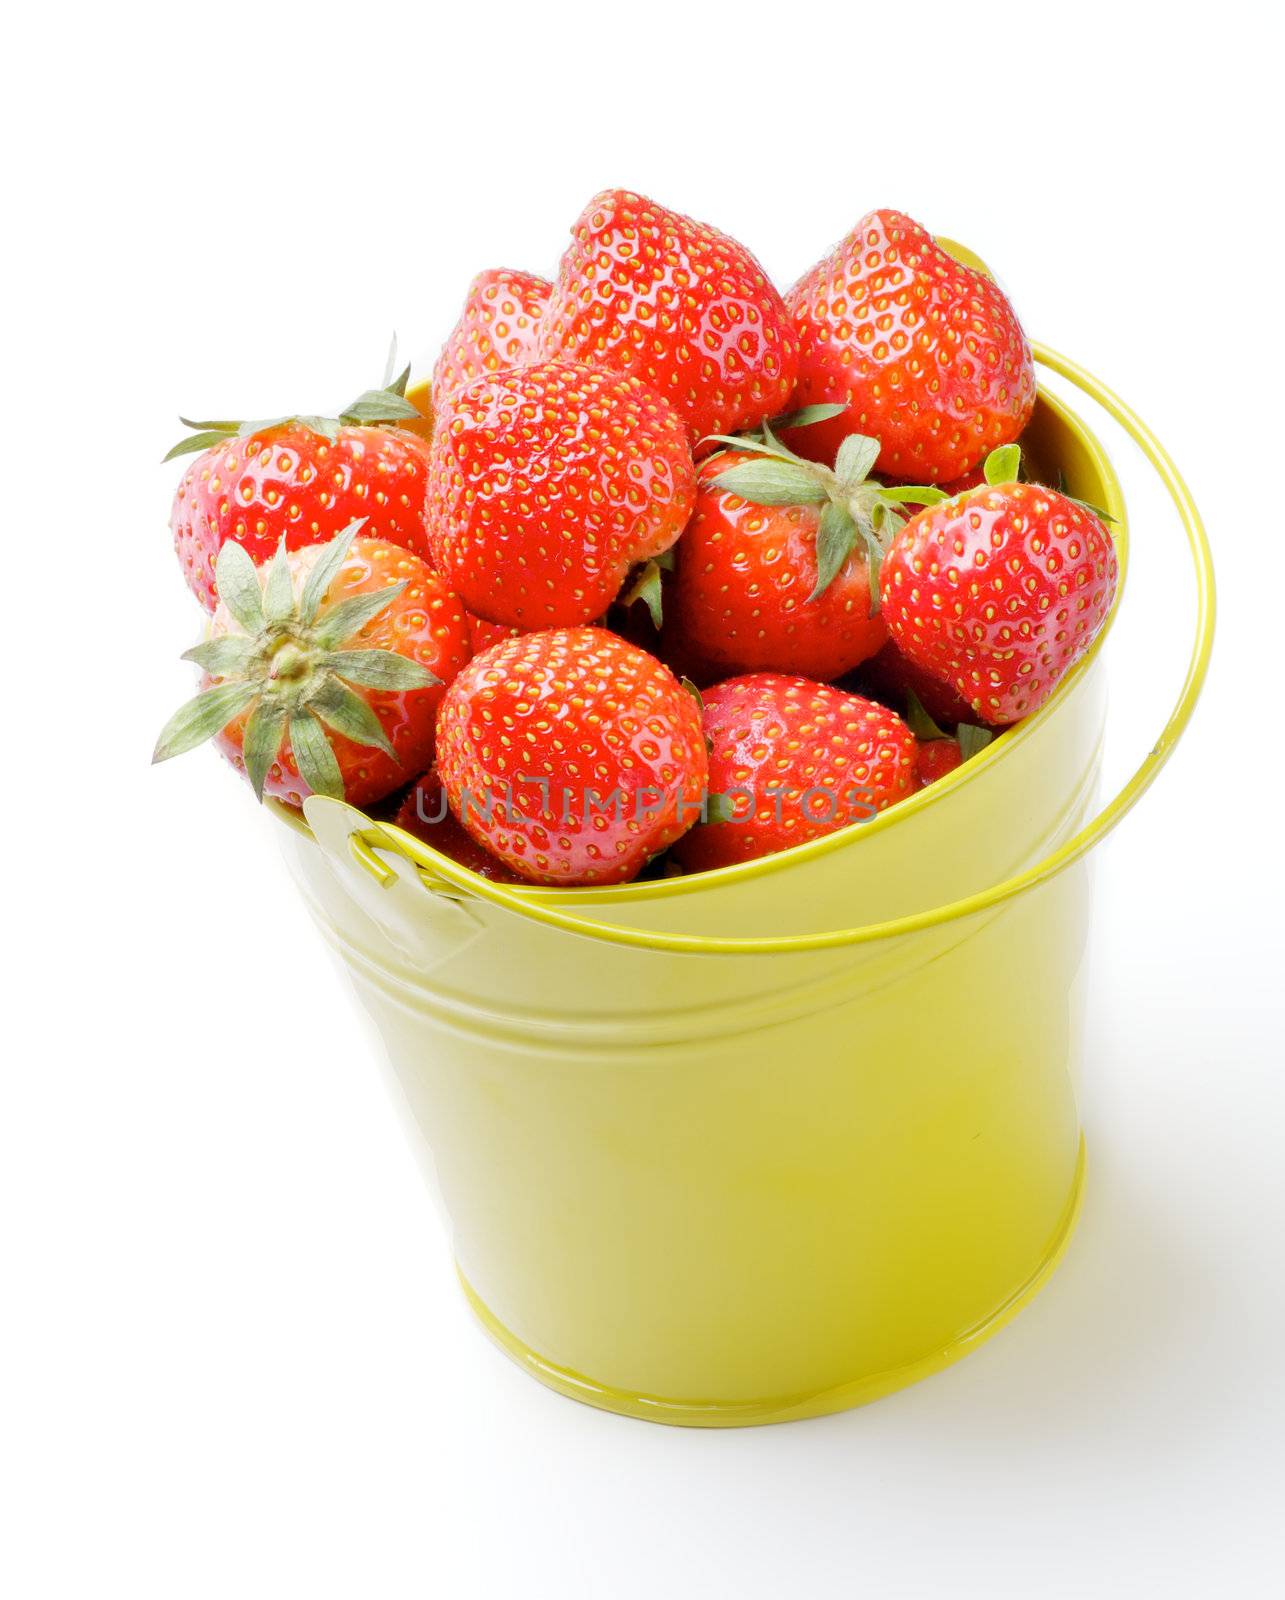 Strawberries inside Yellow Bucket by zhekos